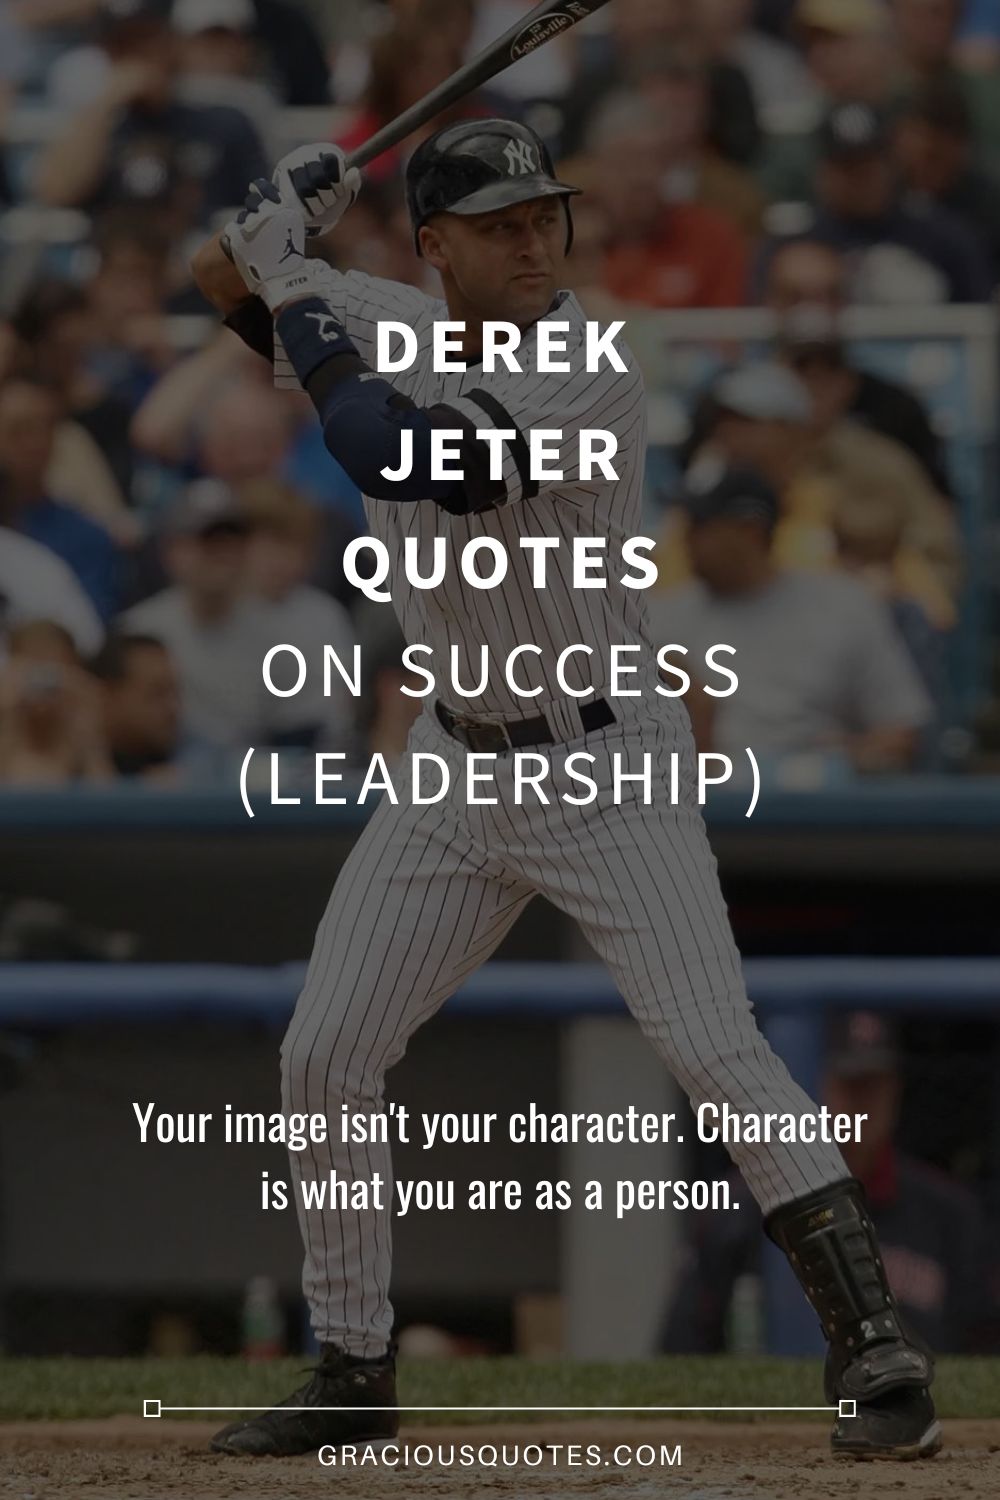 Derek Jeter Quotes on Success (LEADERSHIP) - Gracious Quotes